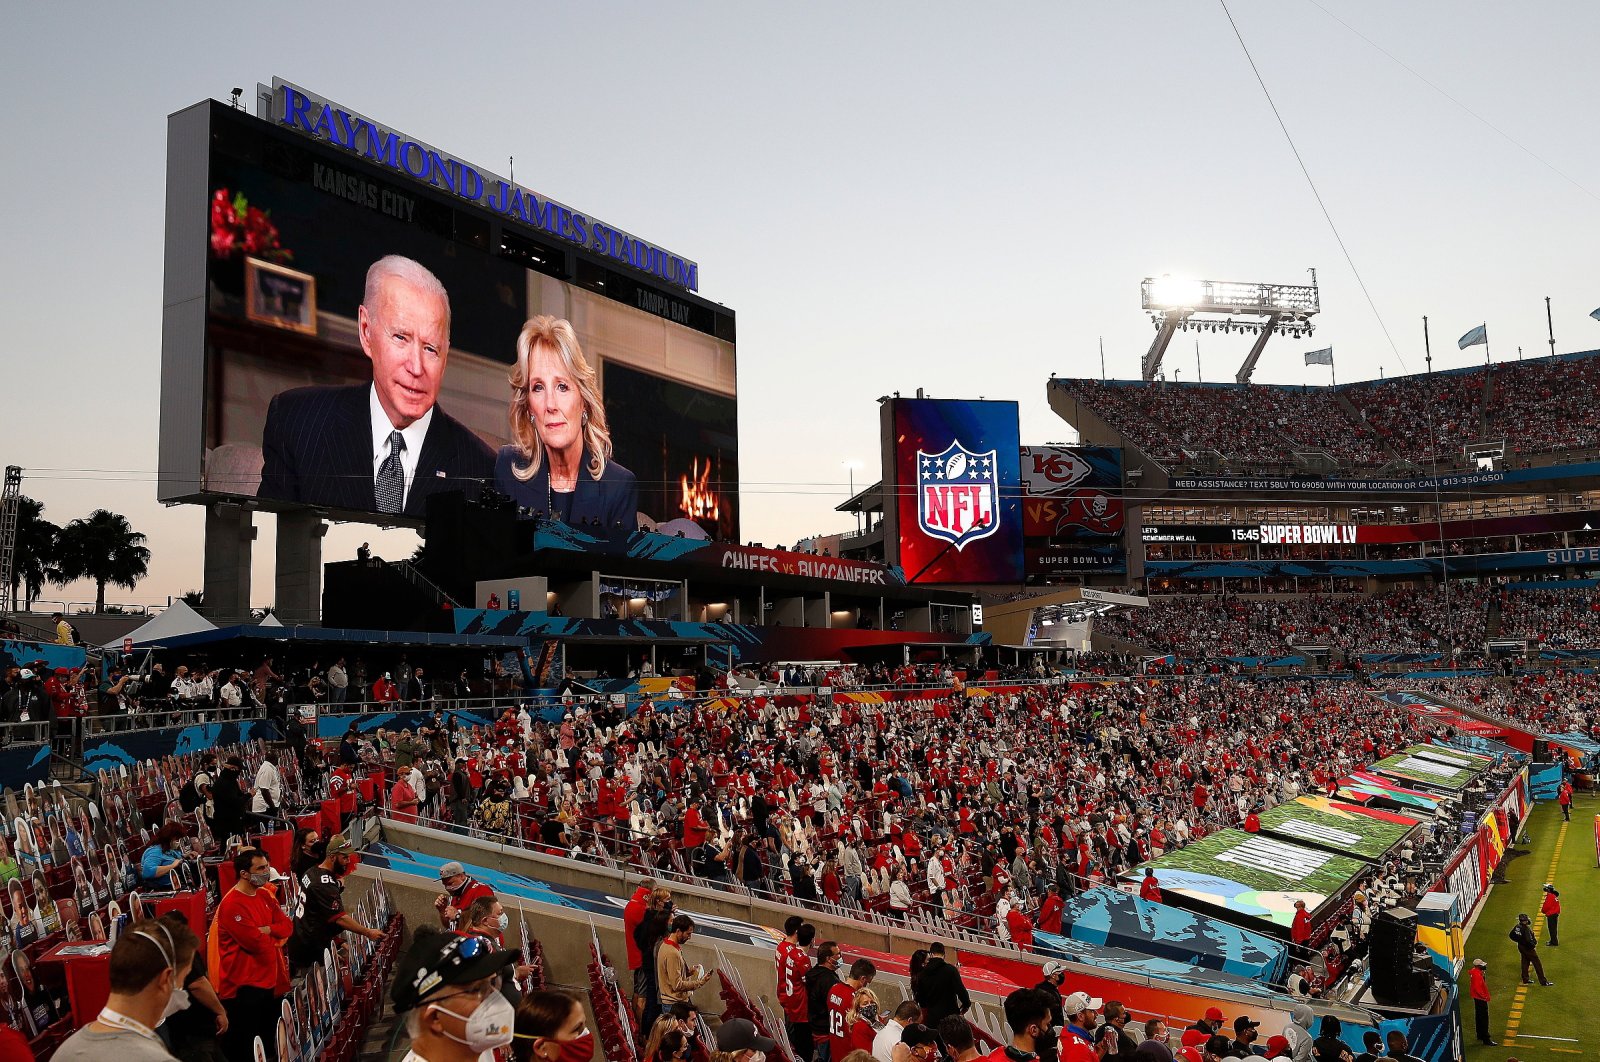 U.S. President Joe Biden and first lady Dr. Jill Biden address NFL Super Bowl LV between the Tampa Bay Buccaneers and the Kansas City Chiefs at Raymond James Stadium, Tampa, Florida, U.S., Feb. 7, 2021. (EPA Photo)